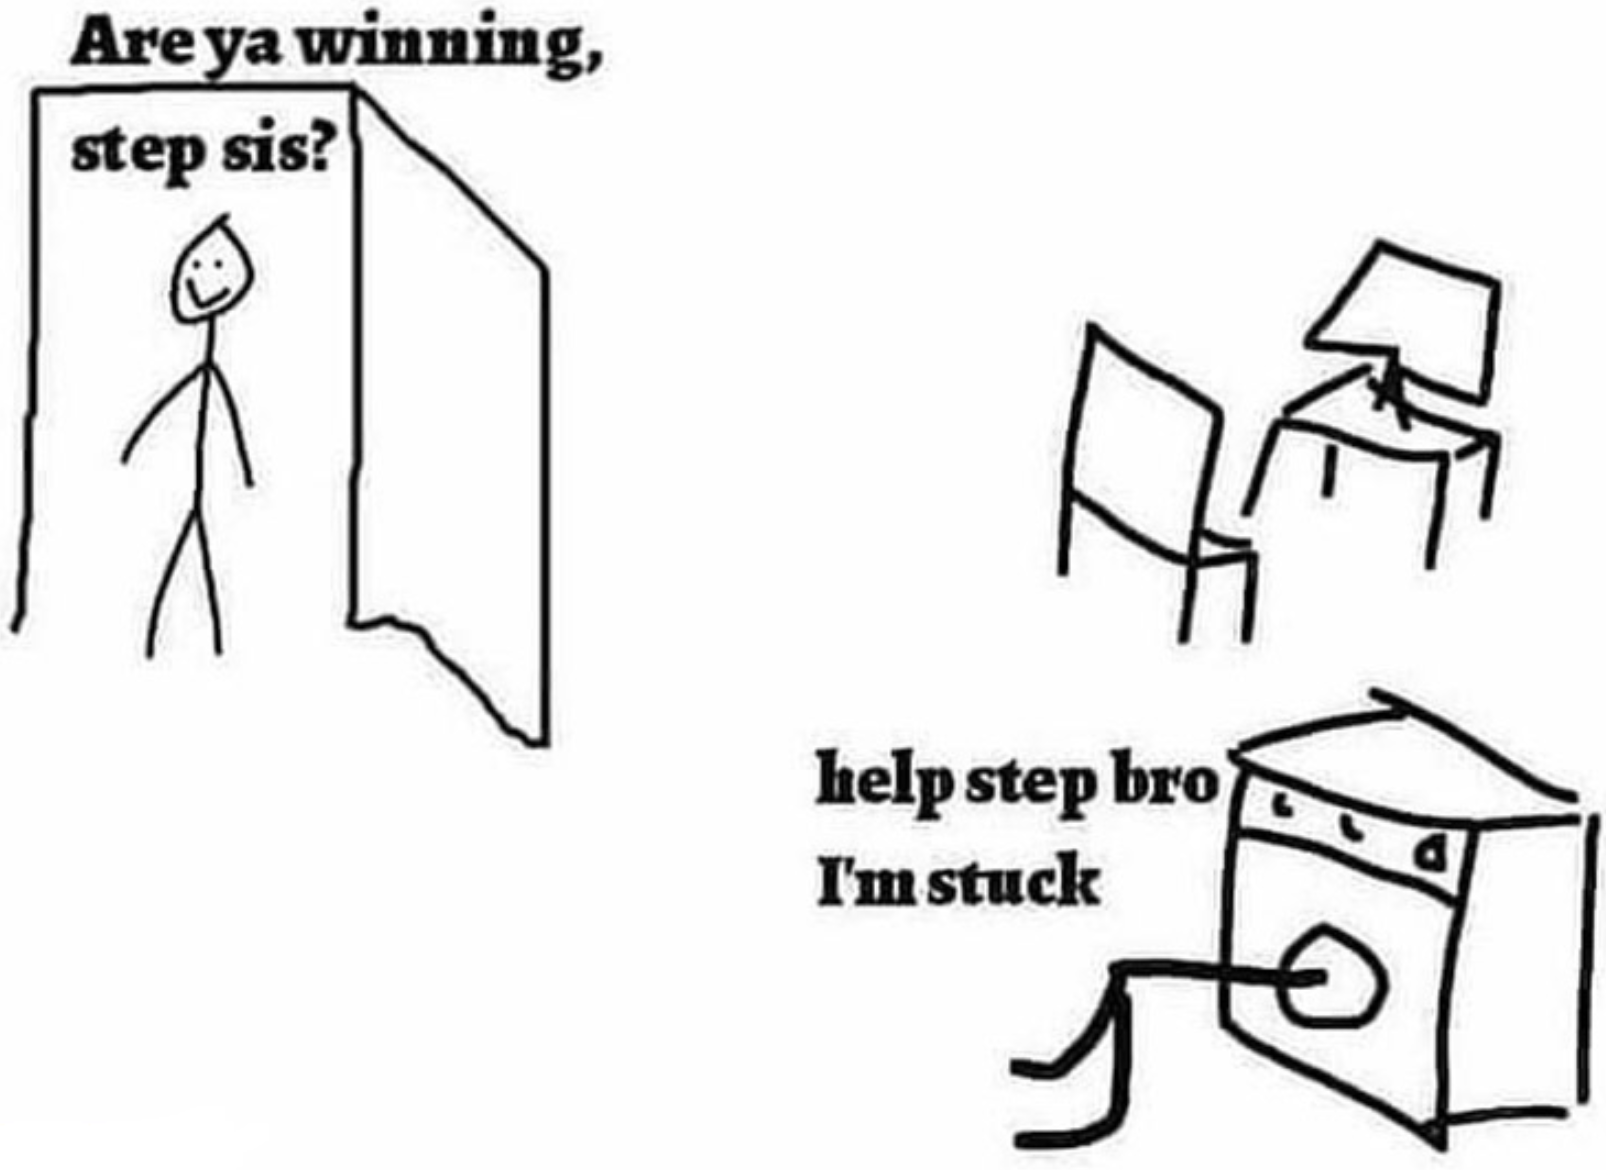 funny gaming memes - step sis memes - Are ya winning, step sis? A help step bro I'm stuck